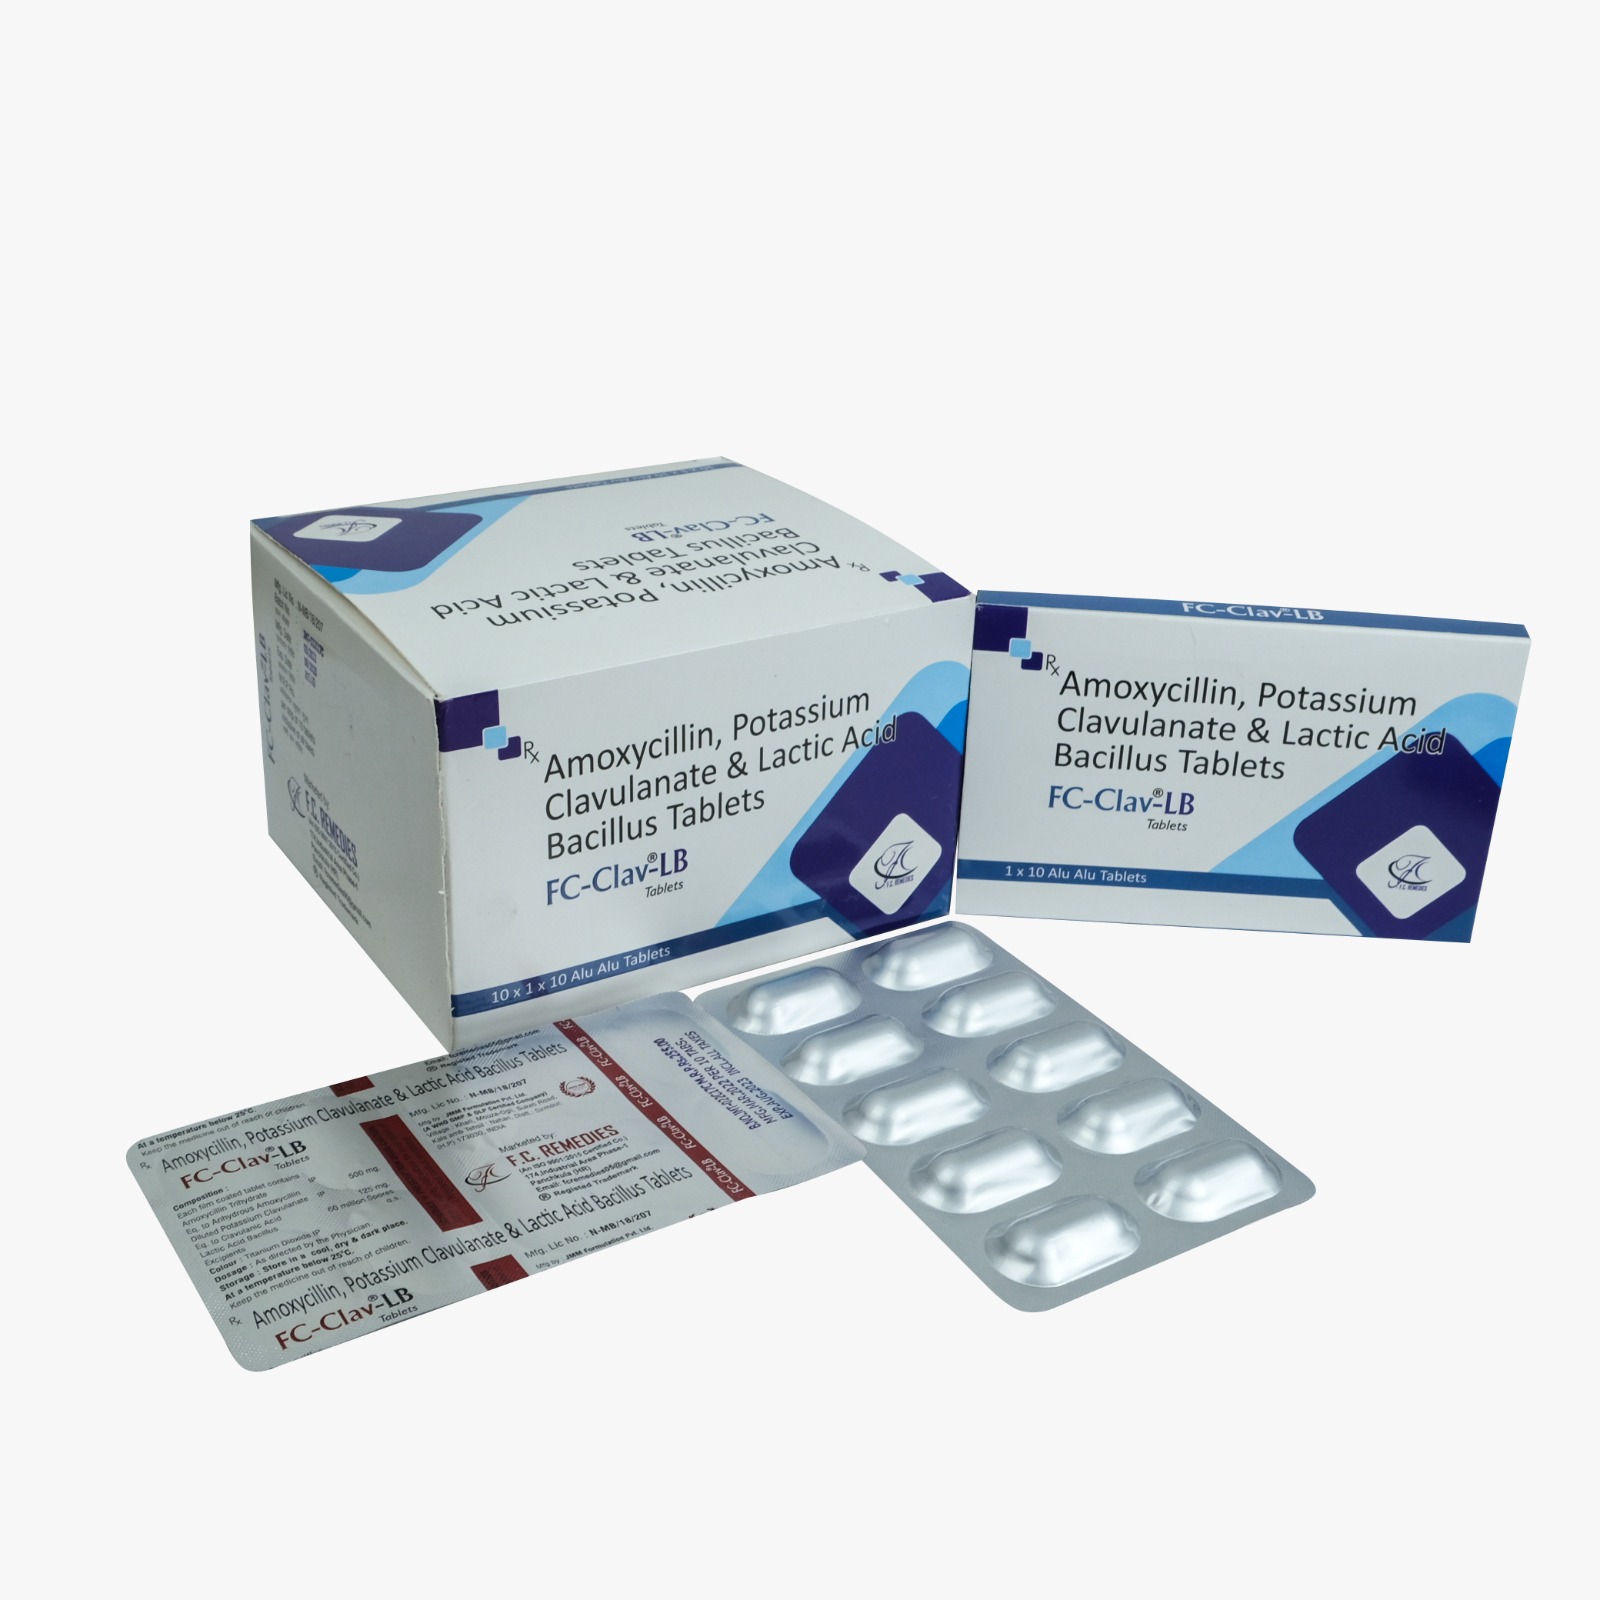 Amoxycillin and Potassium Clavulanate with Lactic Acid Bacillus Tablets